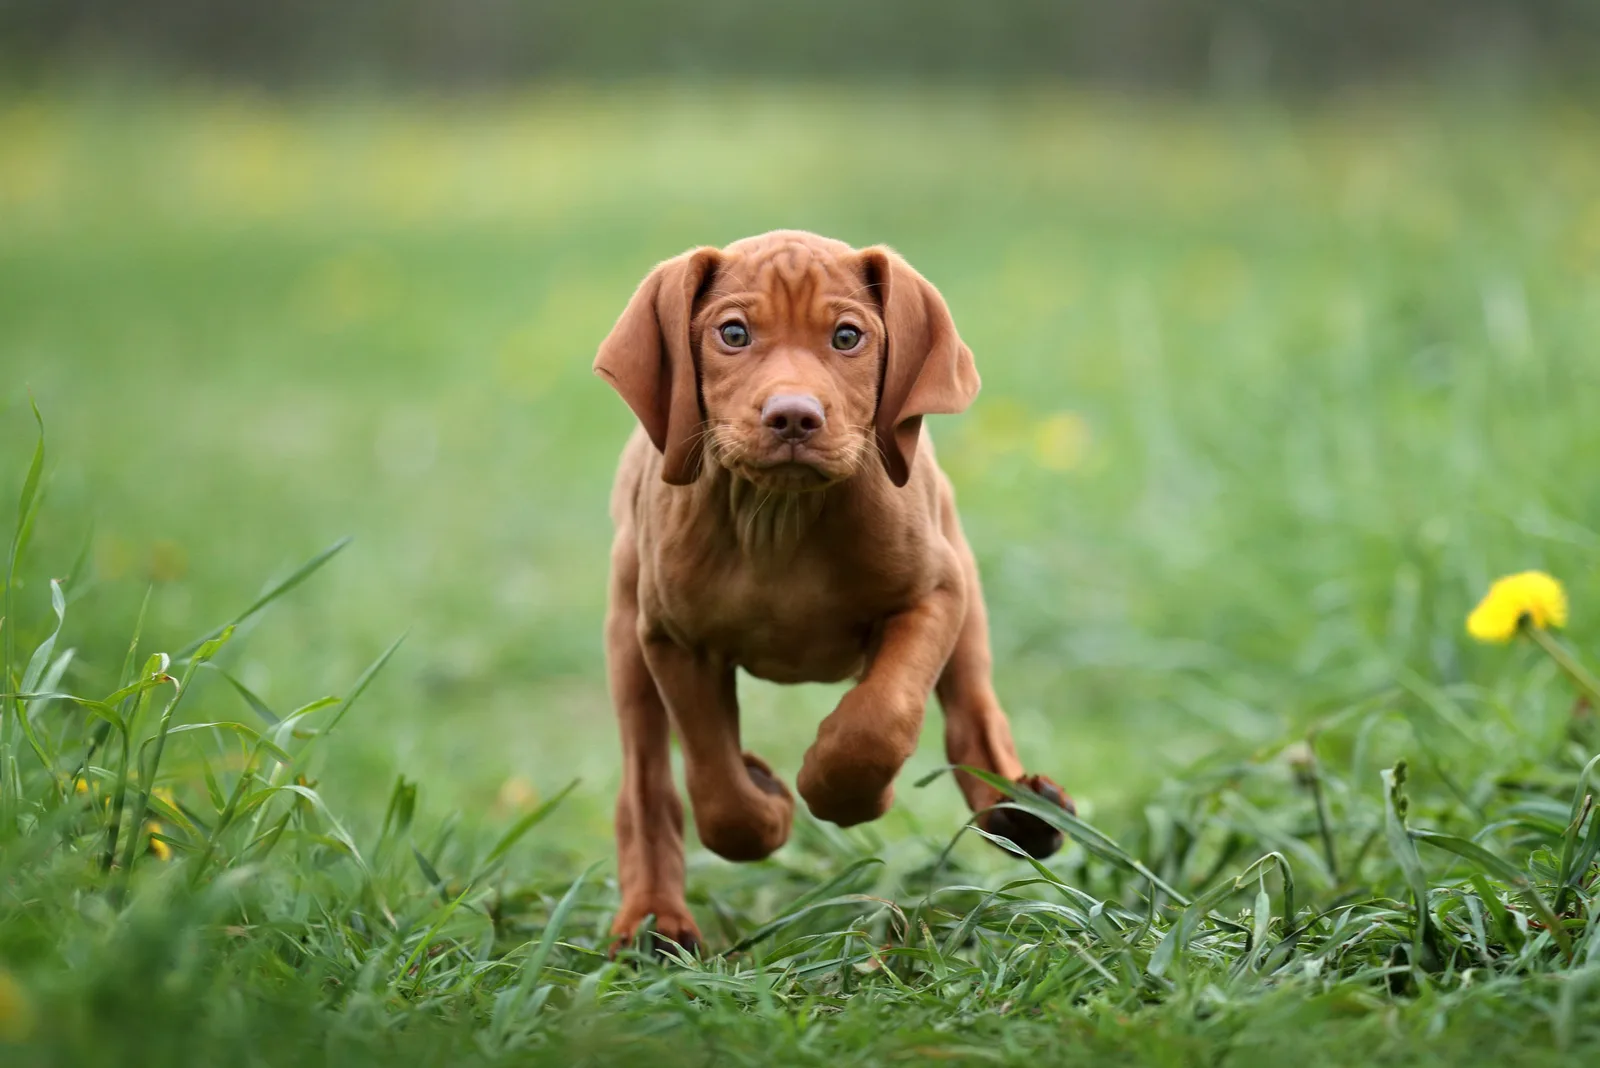 Cute Puppy Vizsla running